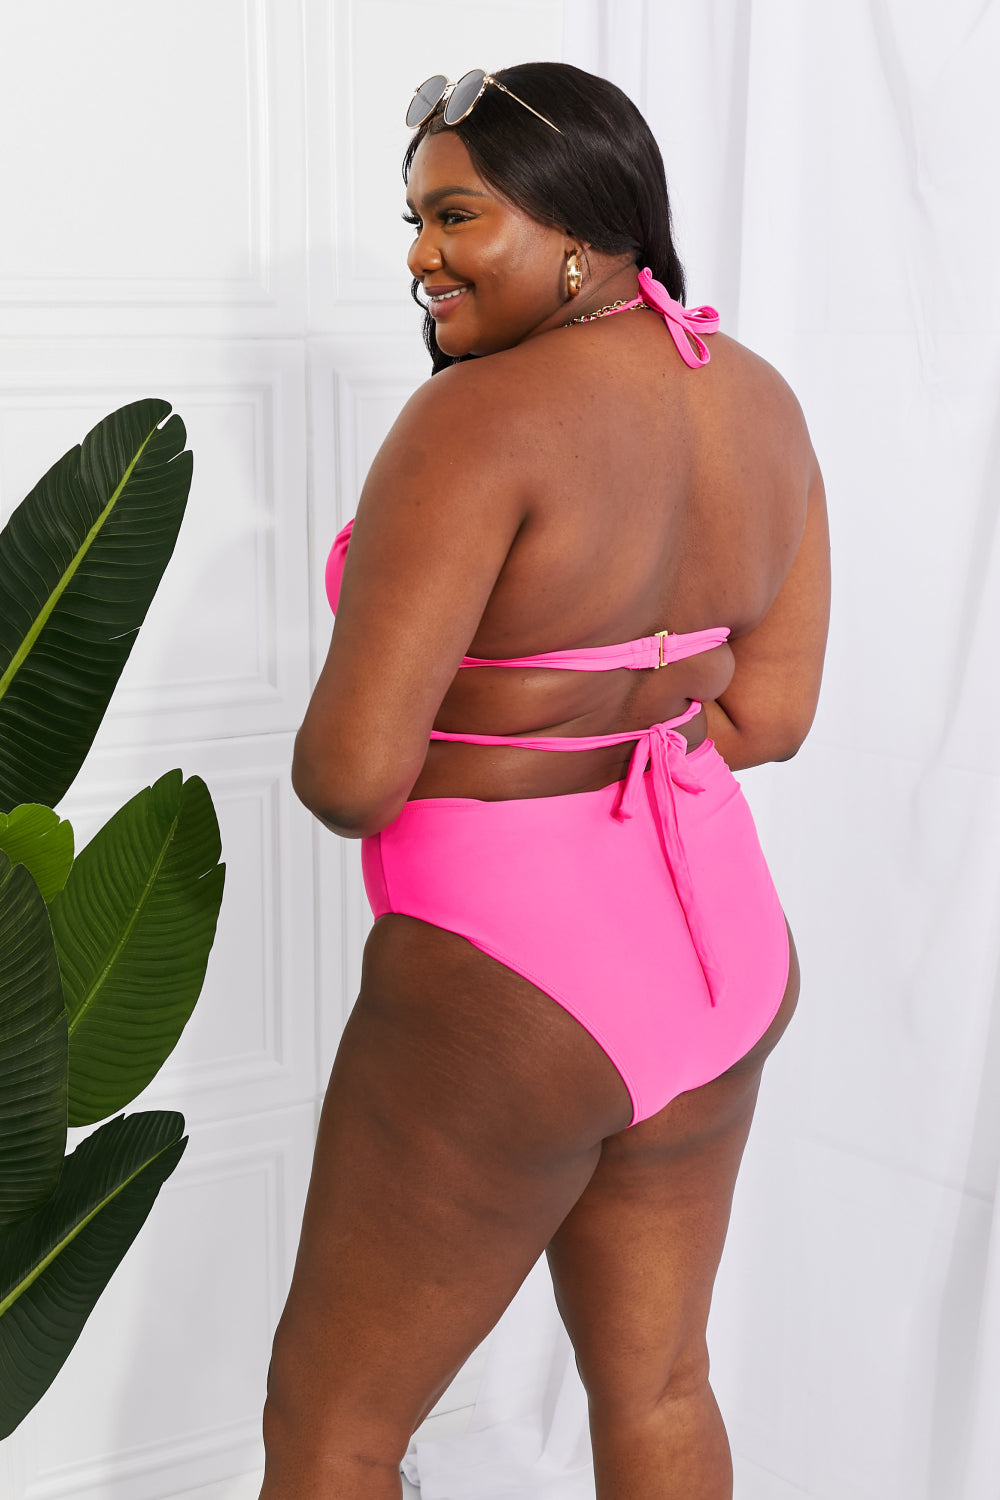 Marina West Swim Summer Splash Halter Bikini Set in Pink - Bikinis & Tankinis - FITGGINS